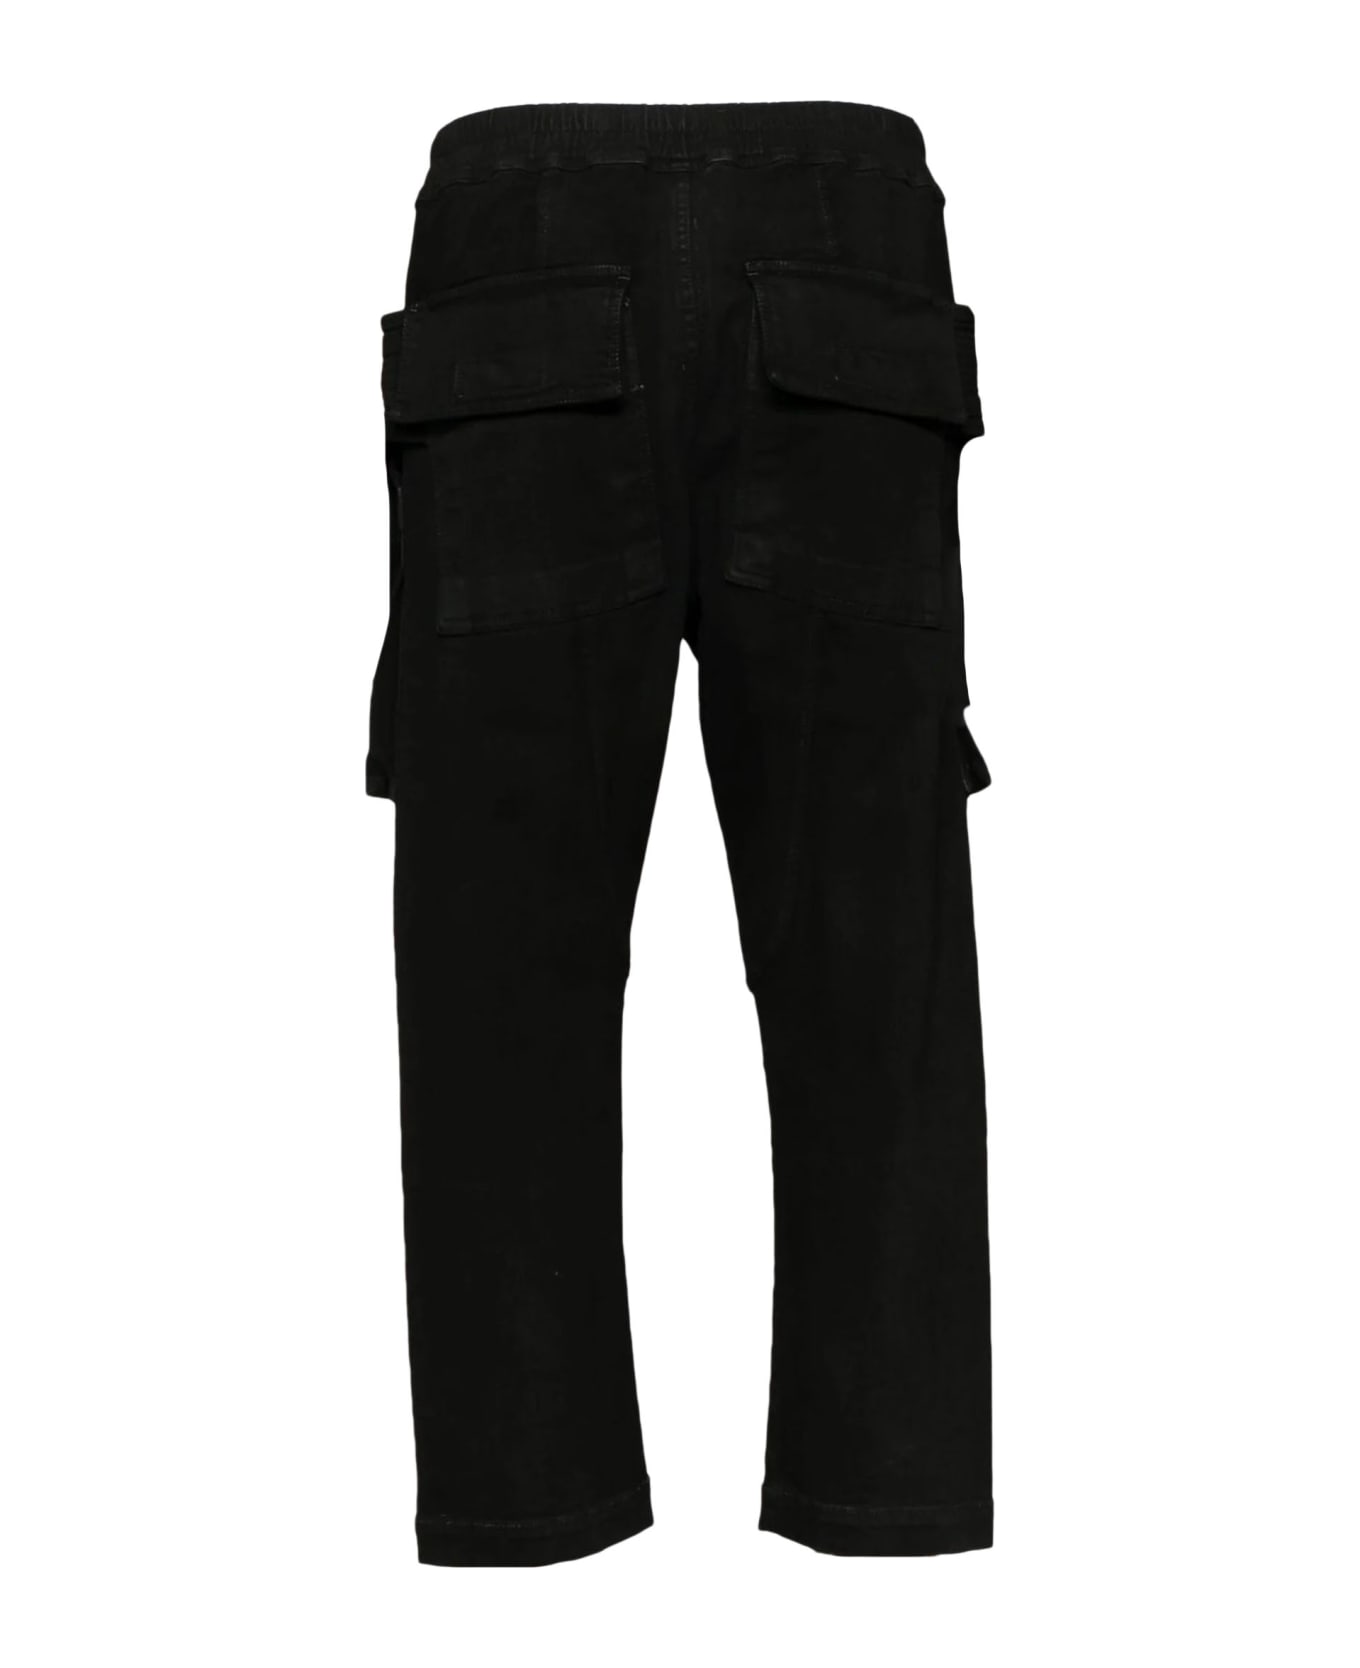 DRKSHDW Trousers Black - Black